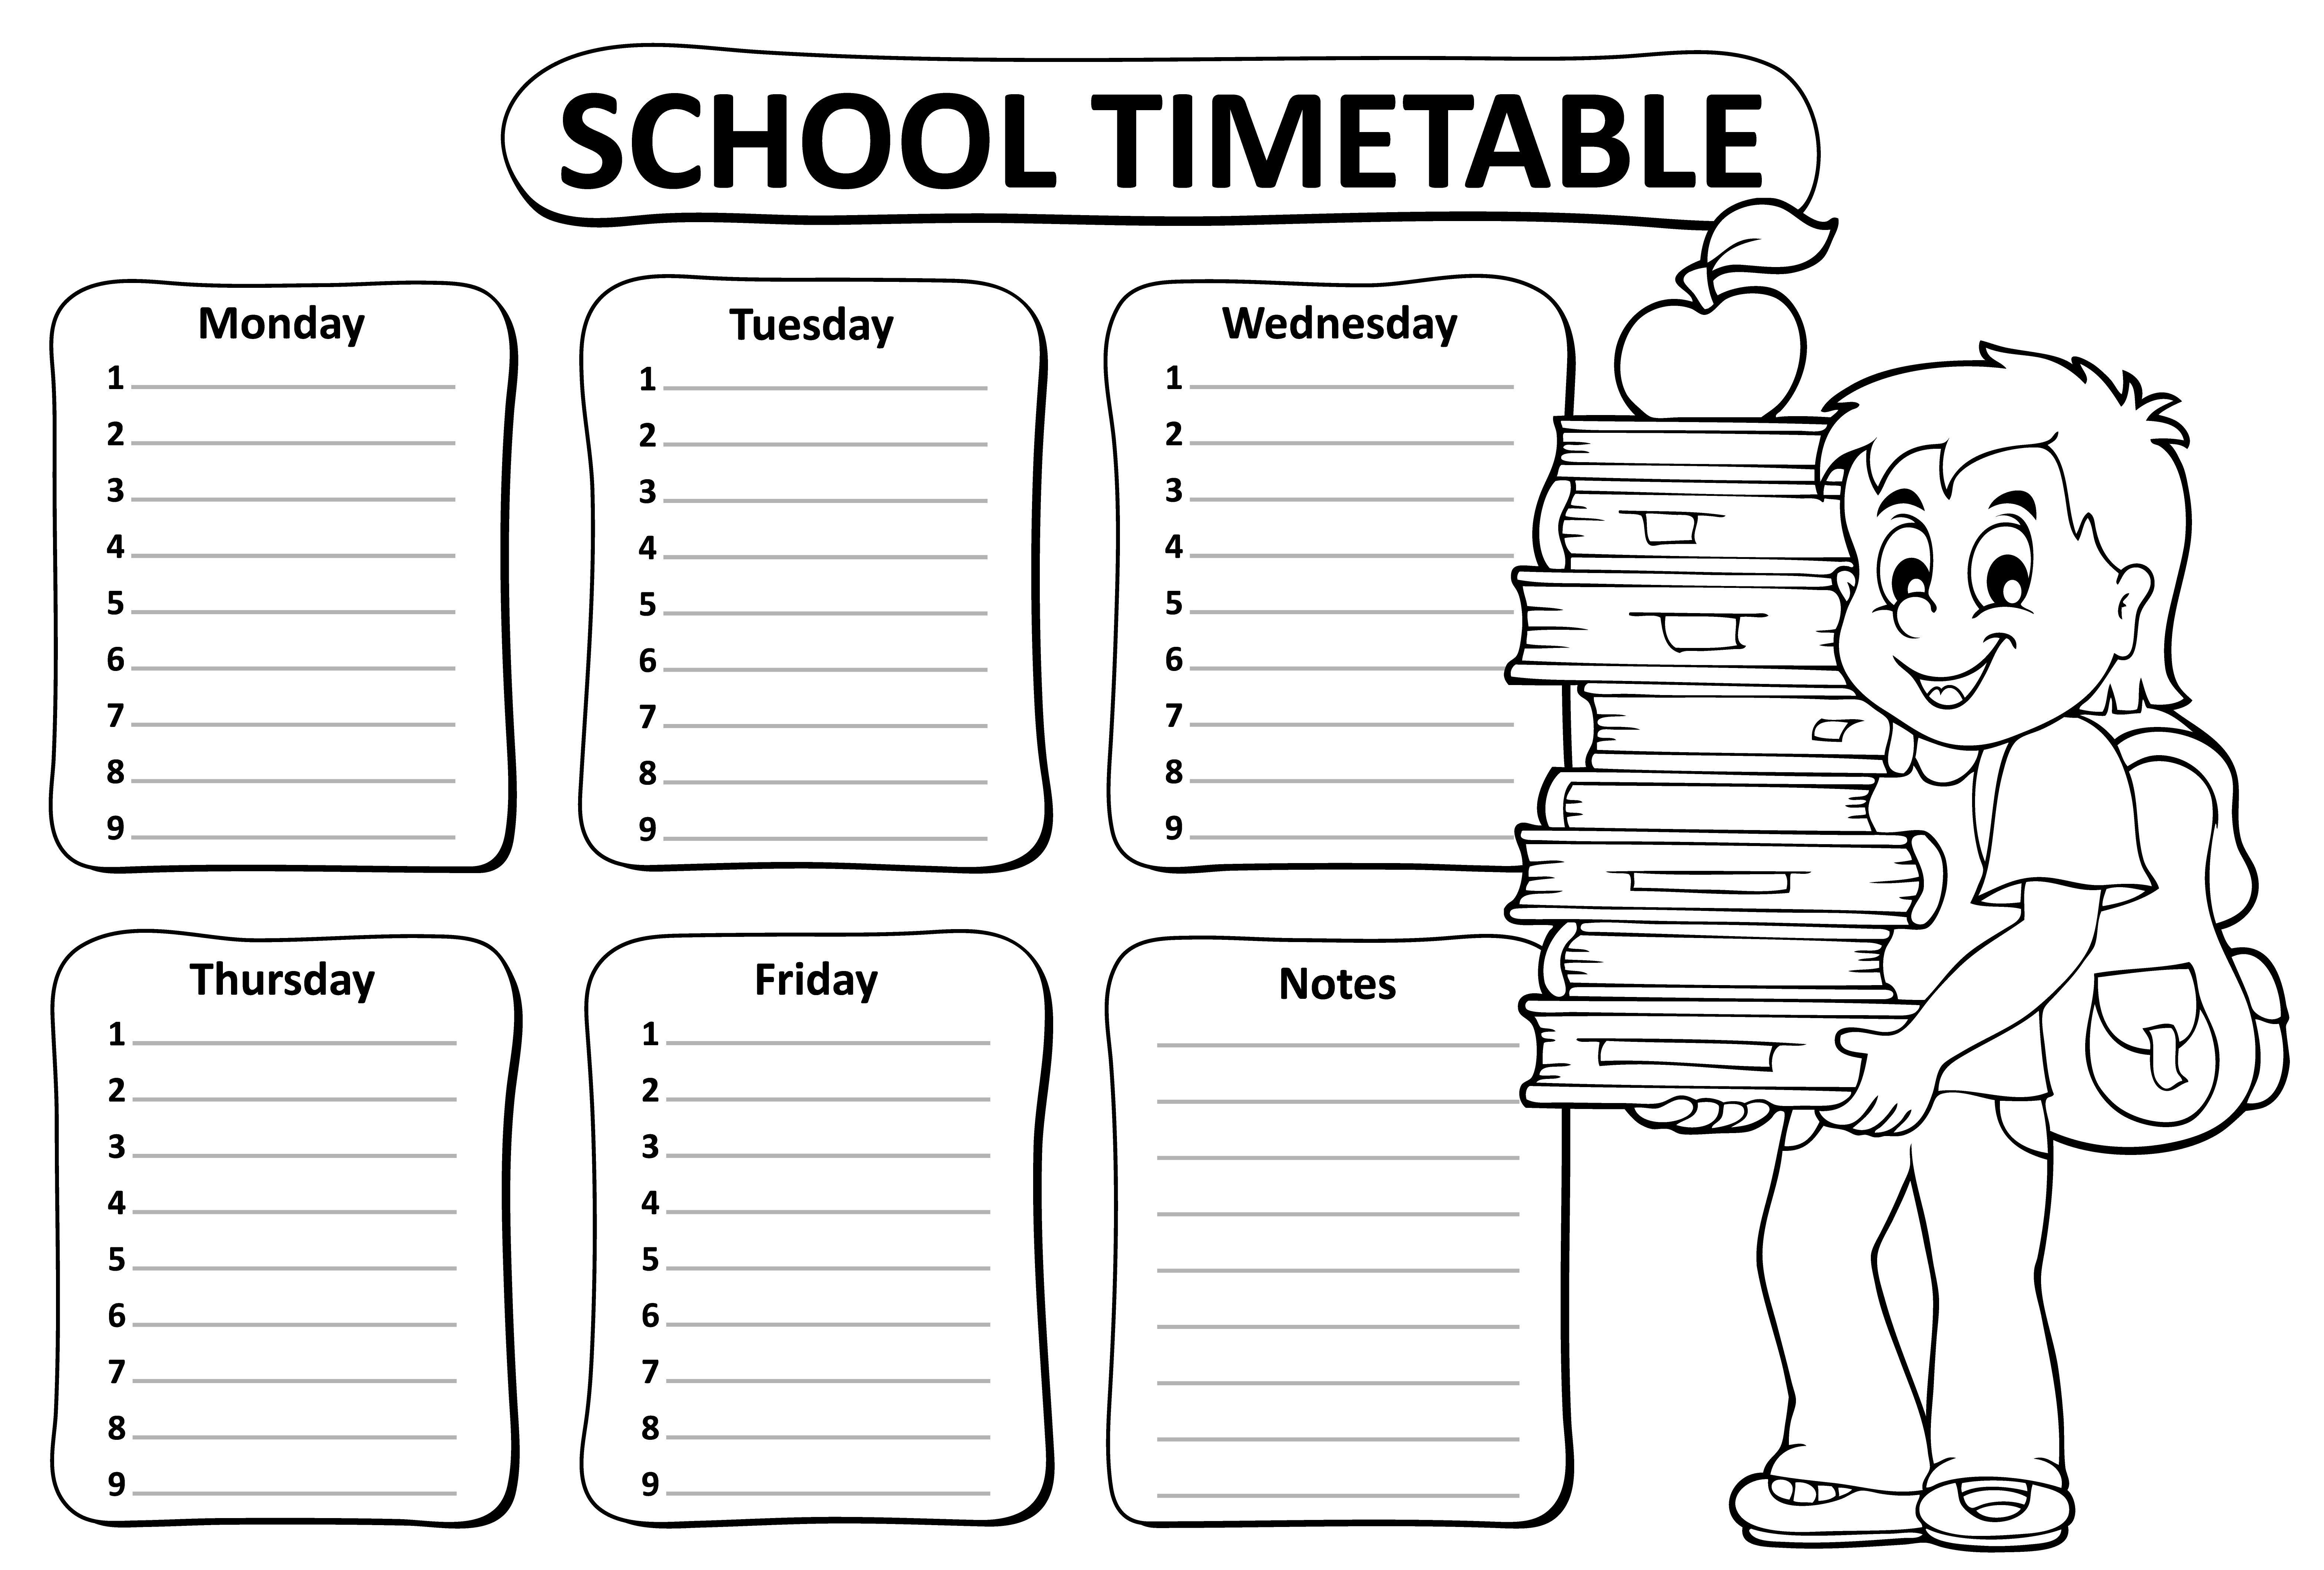 Black and white school timetable theme 2 - eps10 vector illustration.